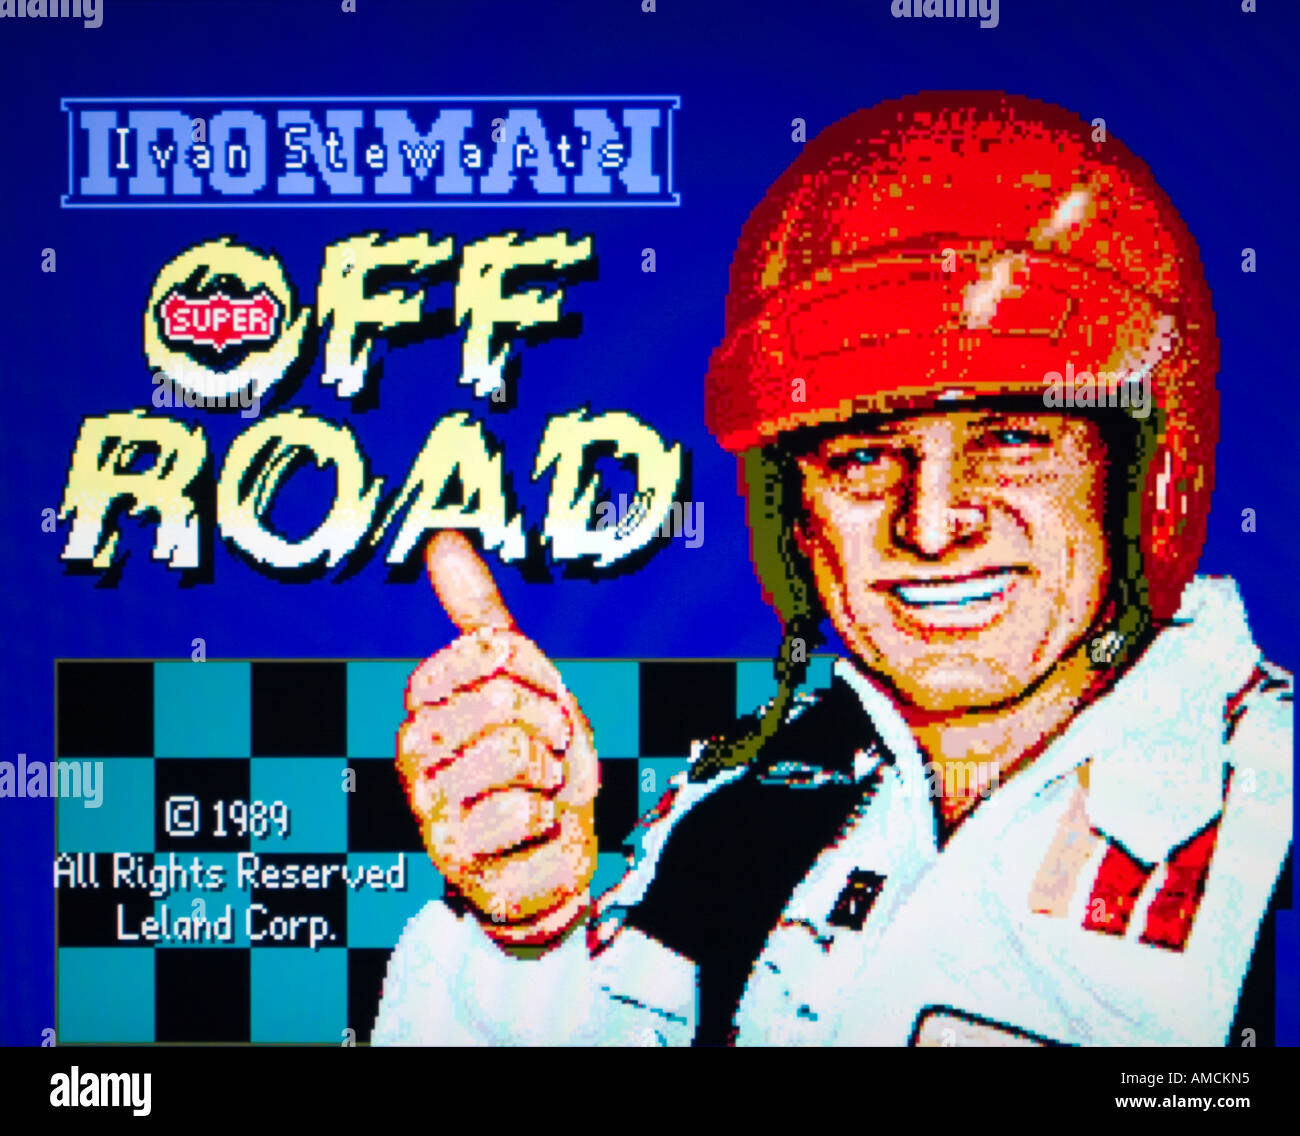 Iron Man Ironman Ivan Stewart s Off Road Leland Corp 1989 vintage arcade videogame screenshot - EDITORIAL USE ONLY Stock Photo